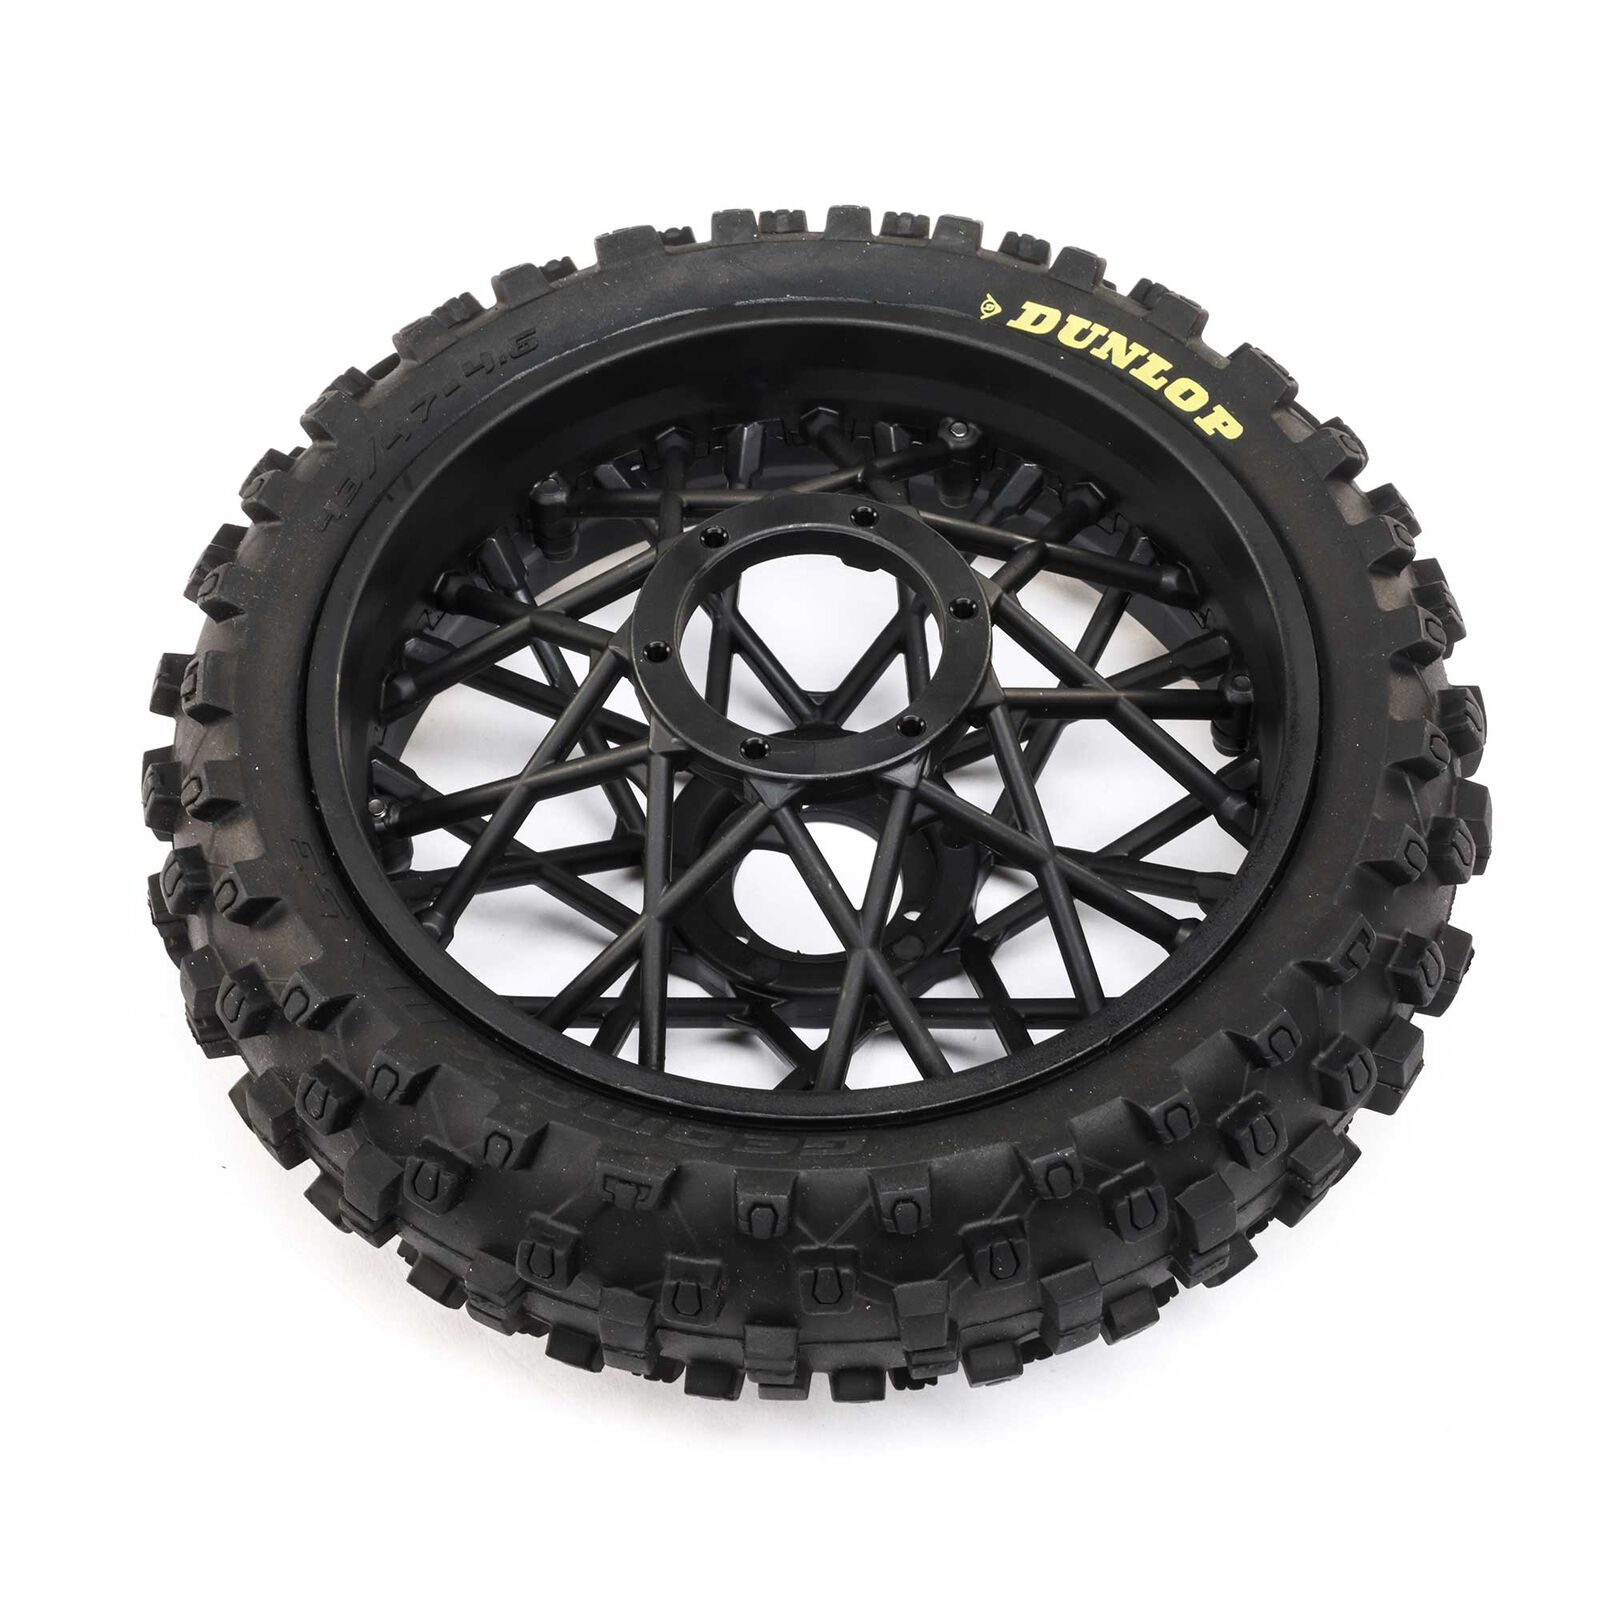 Dunlop MX53 Rear Tire Mounted, Black: Promoto-MX